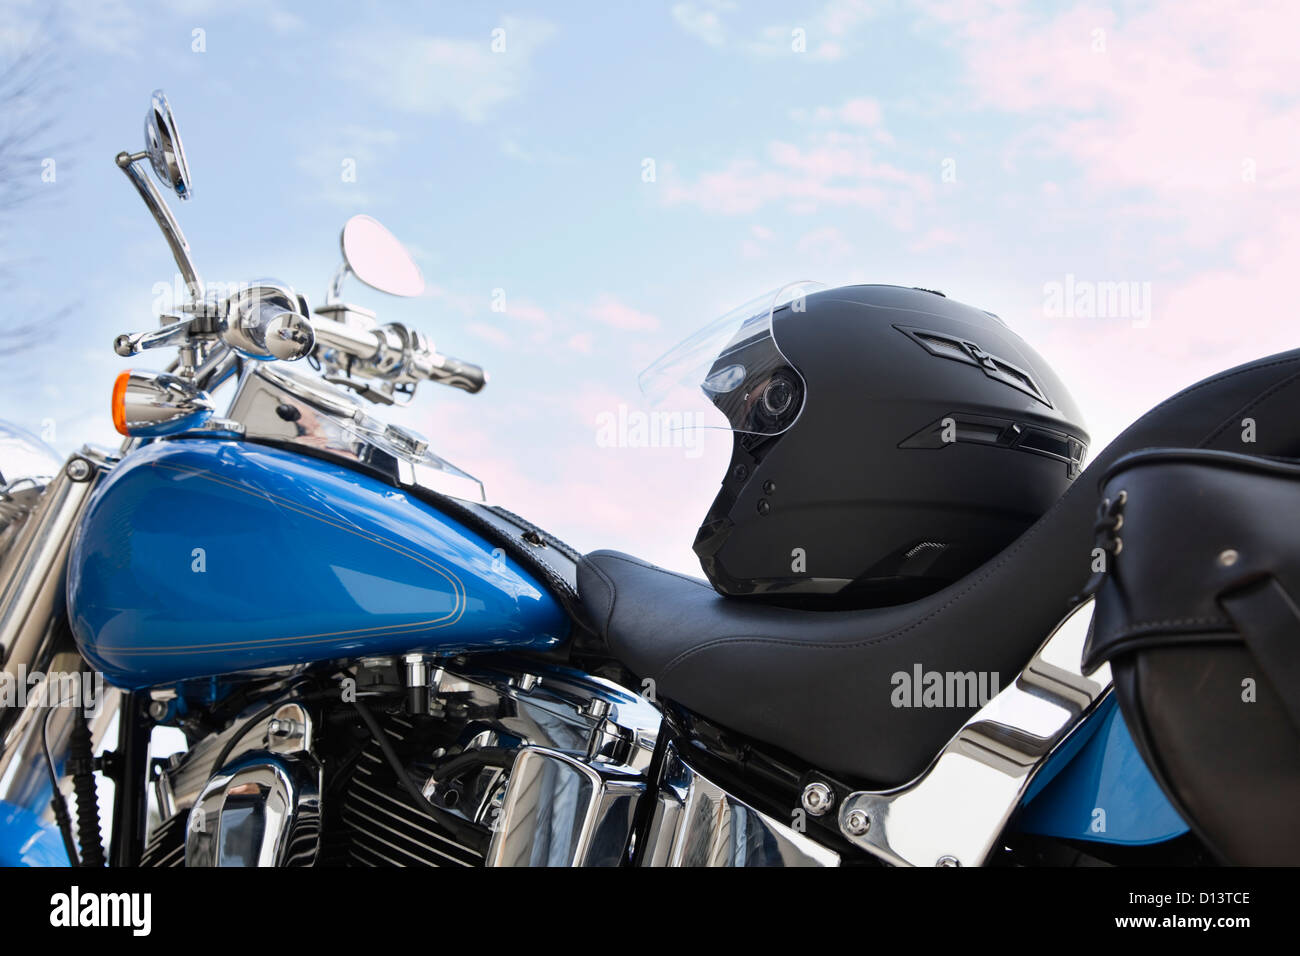 USA, Illinois, Metamora, Close up of safety helmet on motorcycle Stock Photo